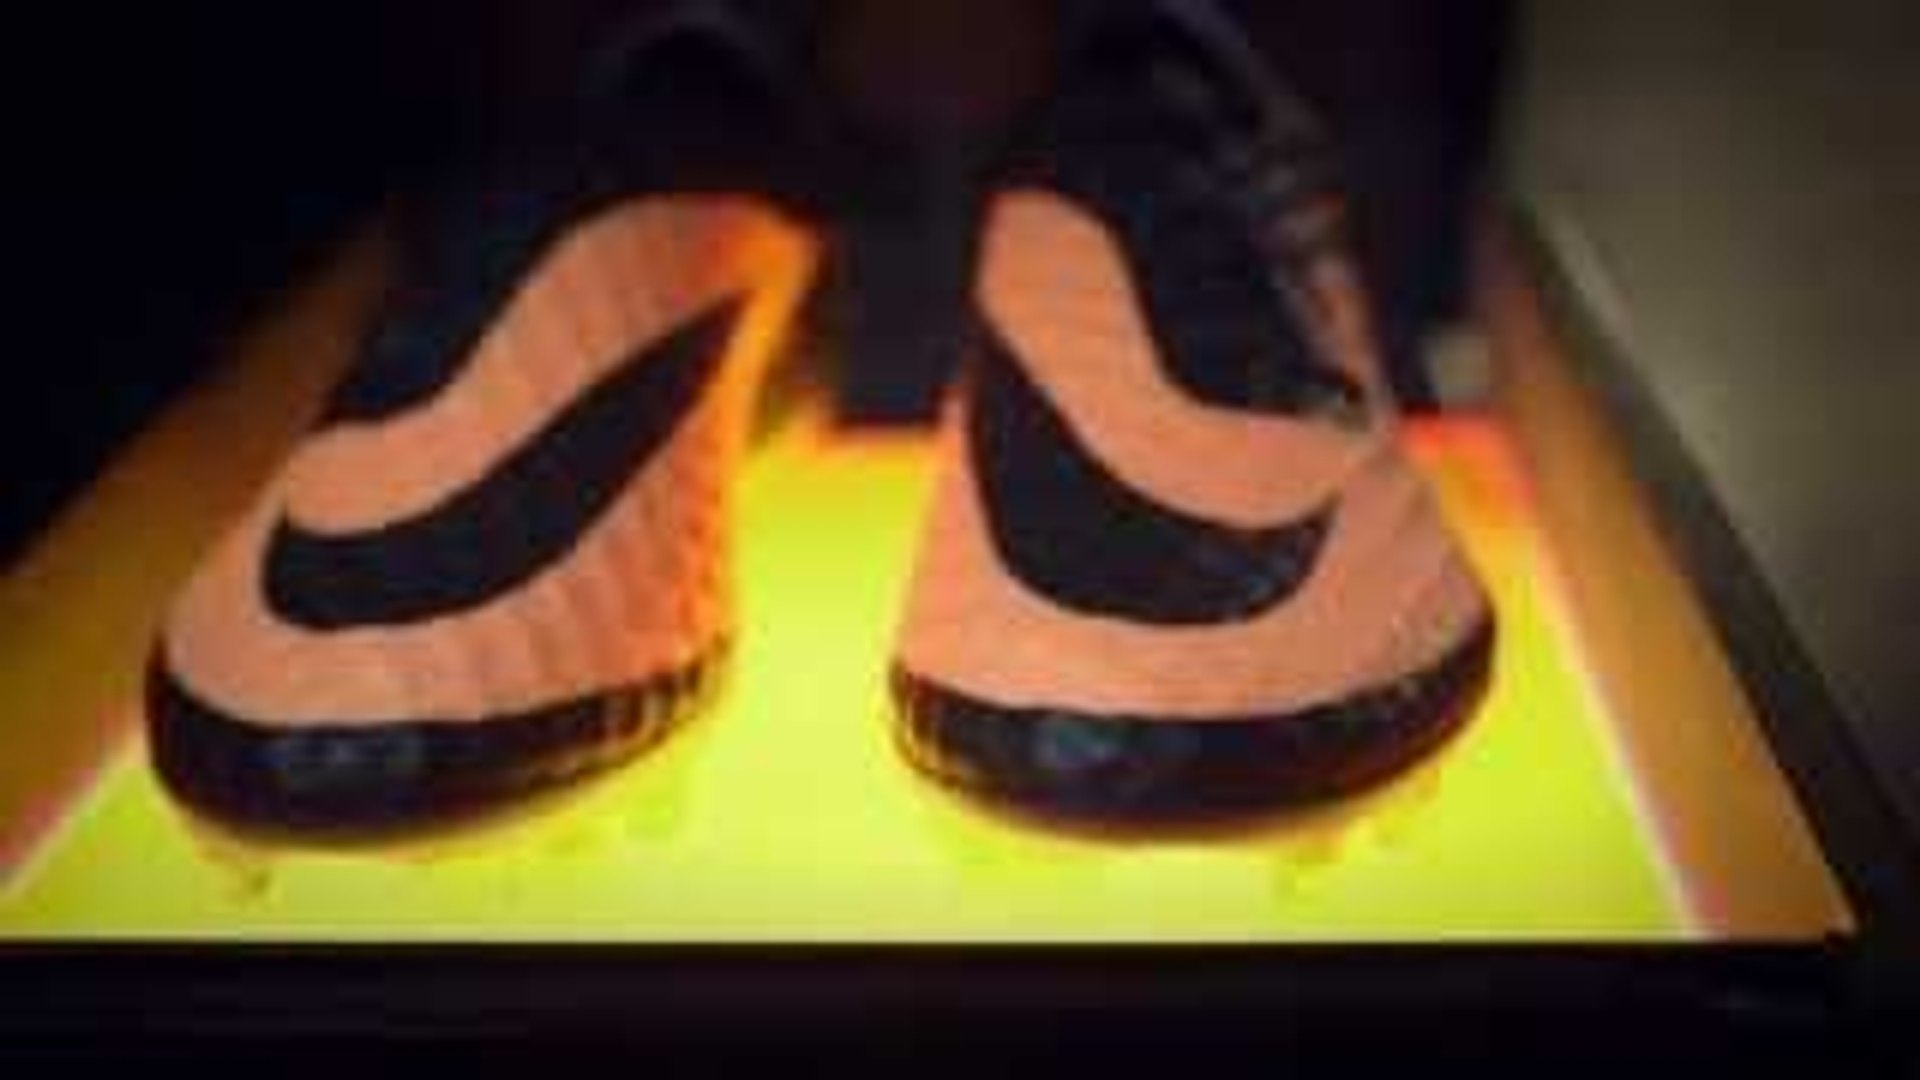 Nike HypervenomX Phelon III Mens Indoor Soccer Shoe